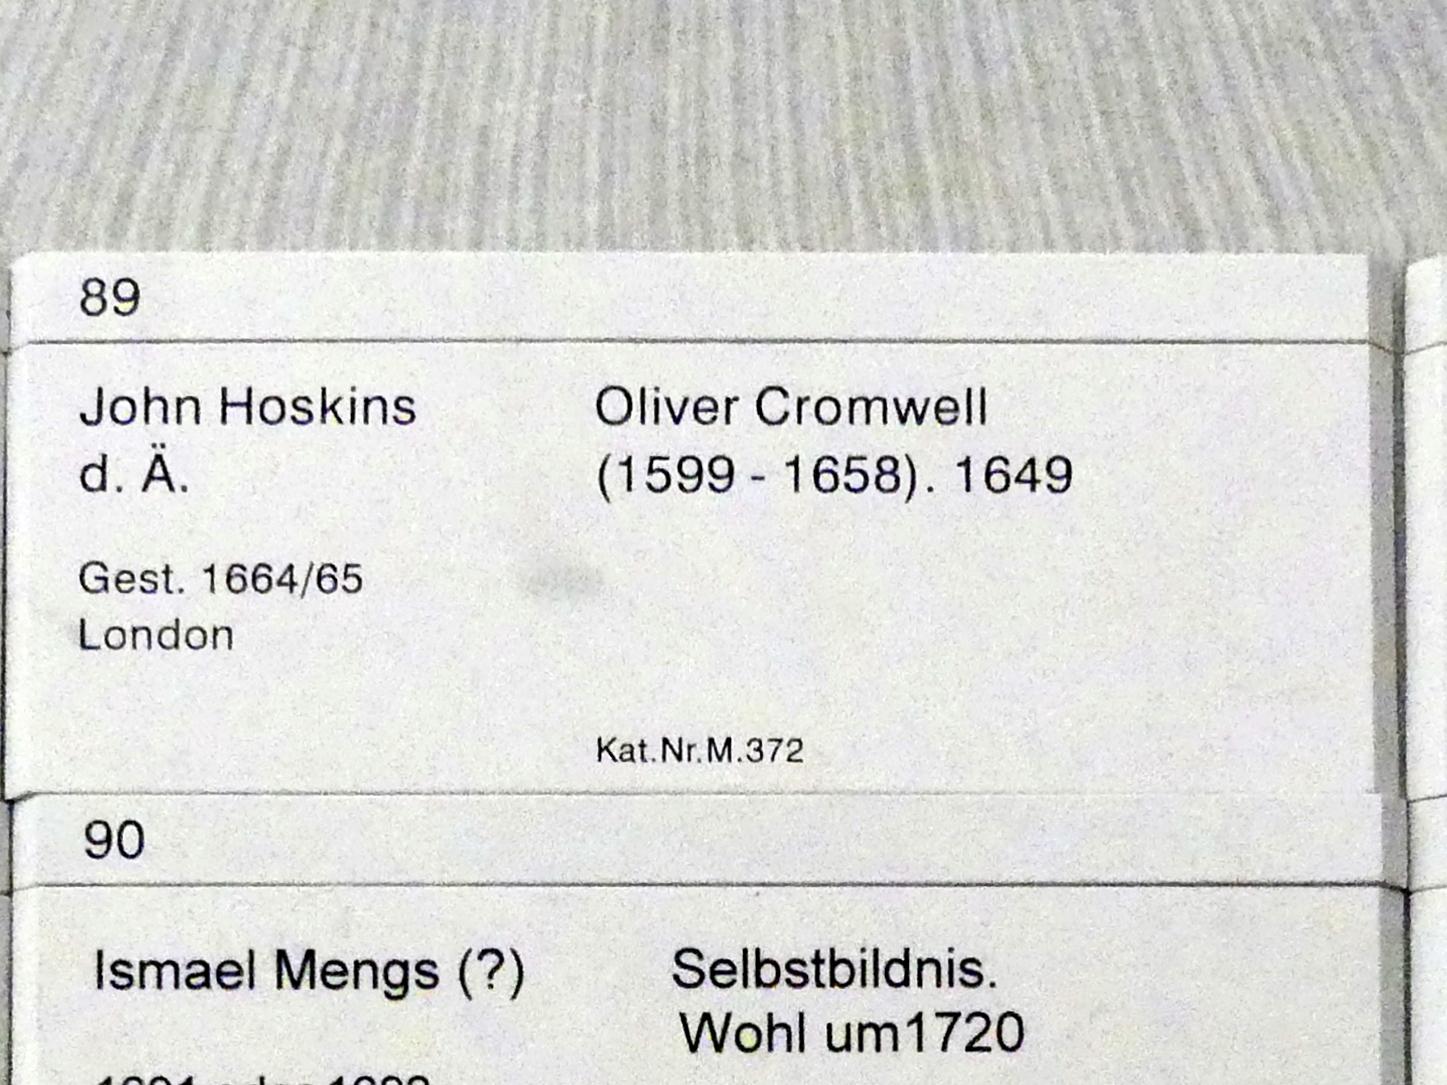 John Hoskins der Ältere (1649), Oliver Cromwell (1599-1658), Berlin, Gemäldegalerie ("Berliner Wunder"), Kabinett 34, 1649, Bild 2/2